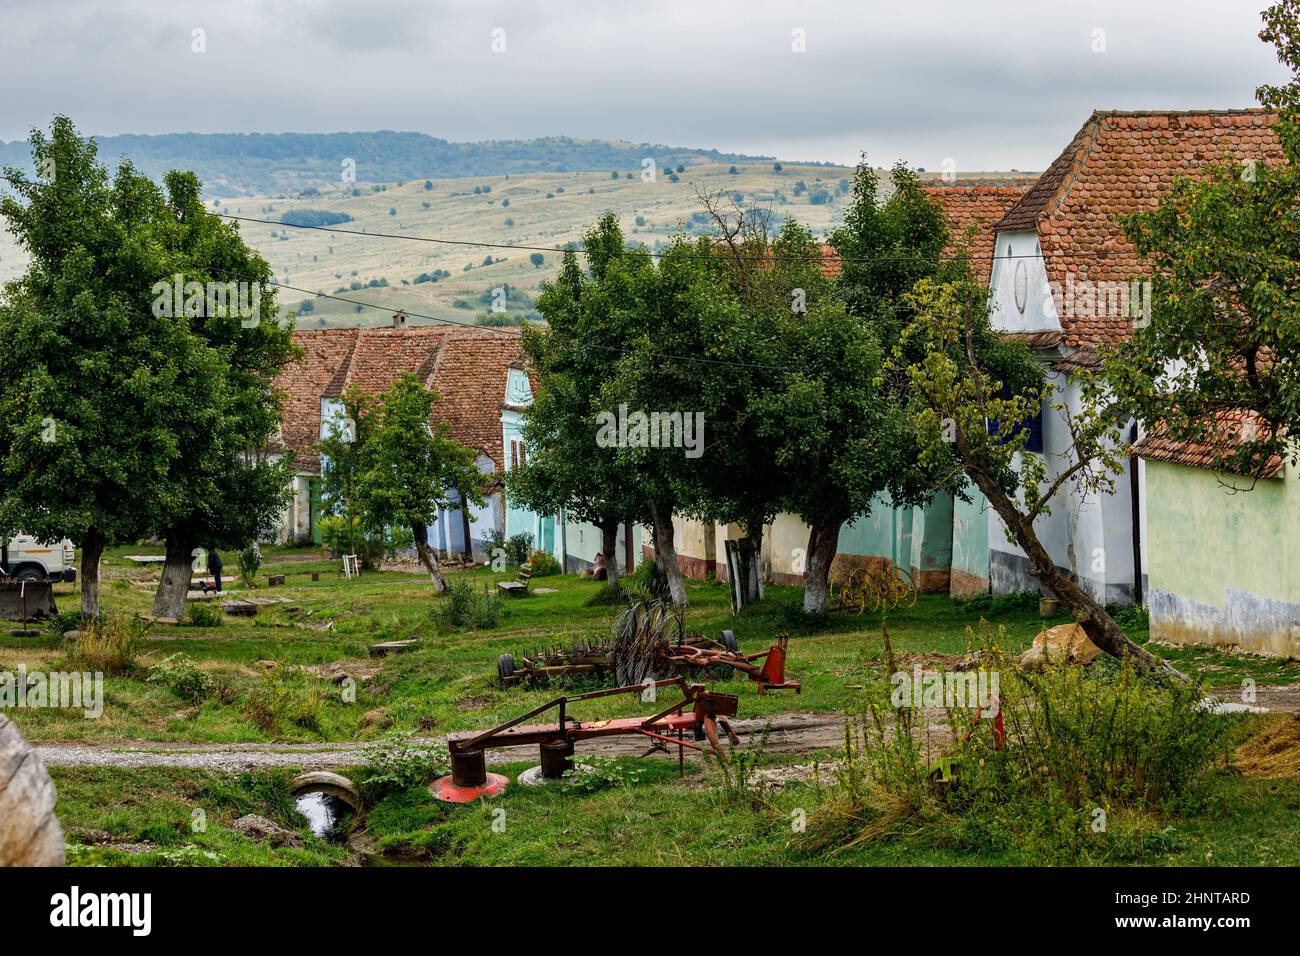 Casas típicas rumanas fotografías e imágenes de alta resolución - Alamy